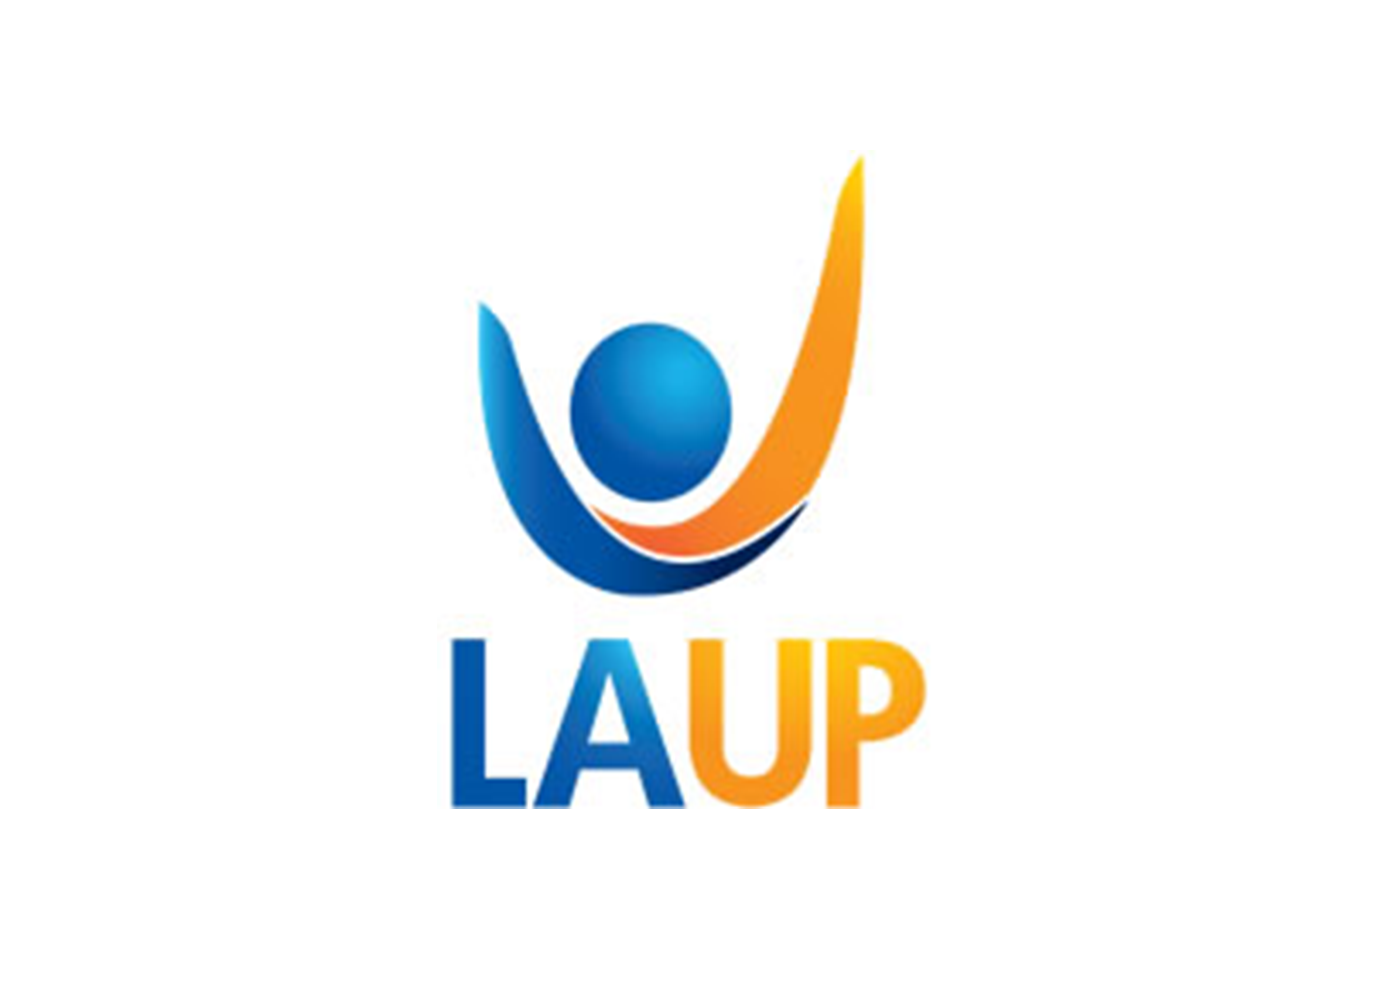 laup logo